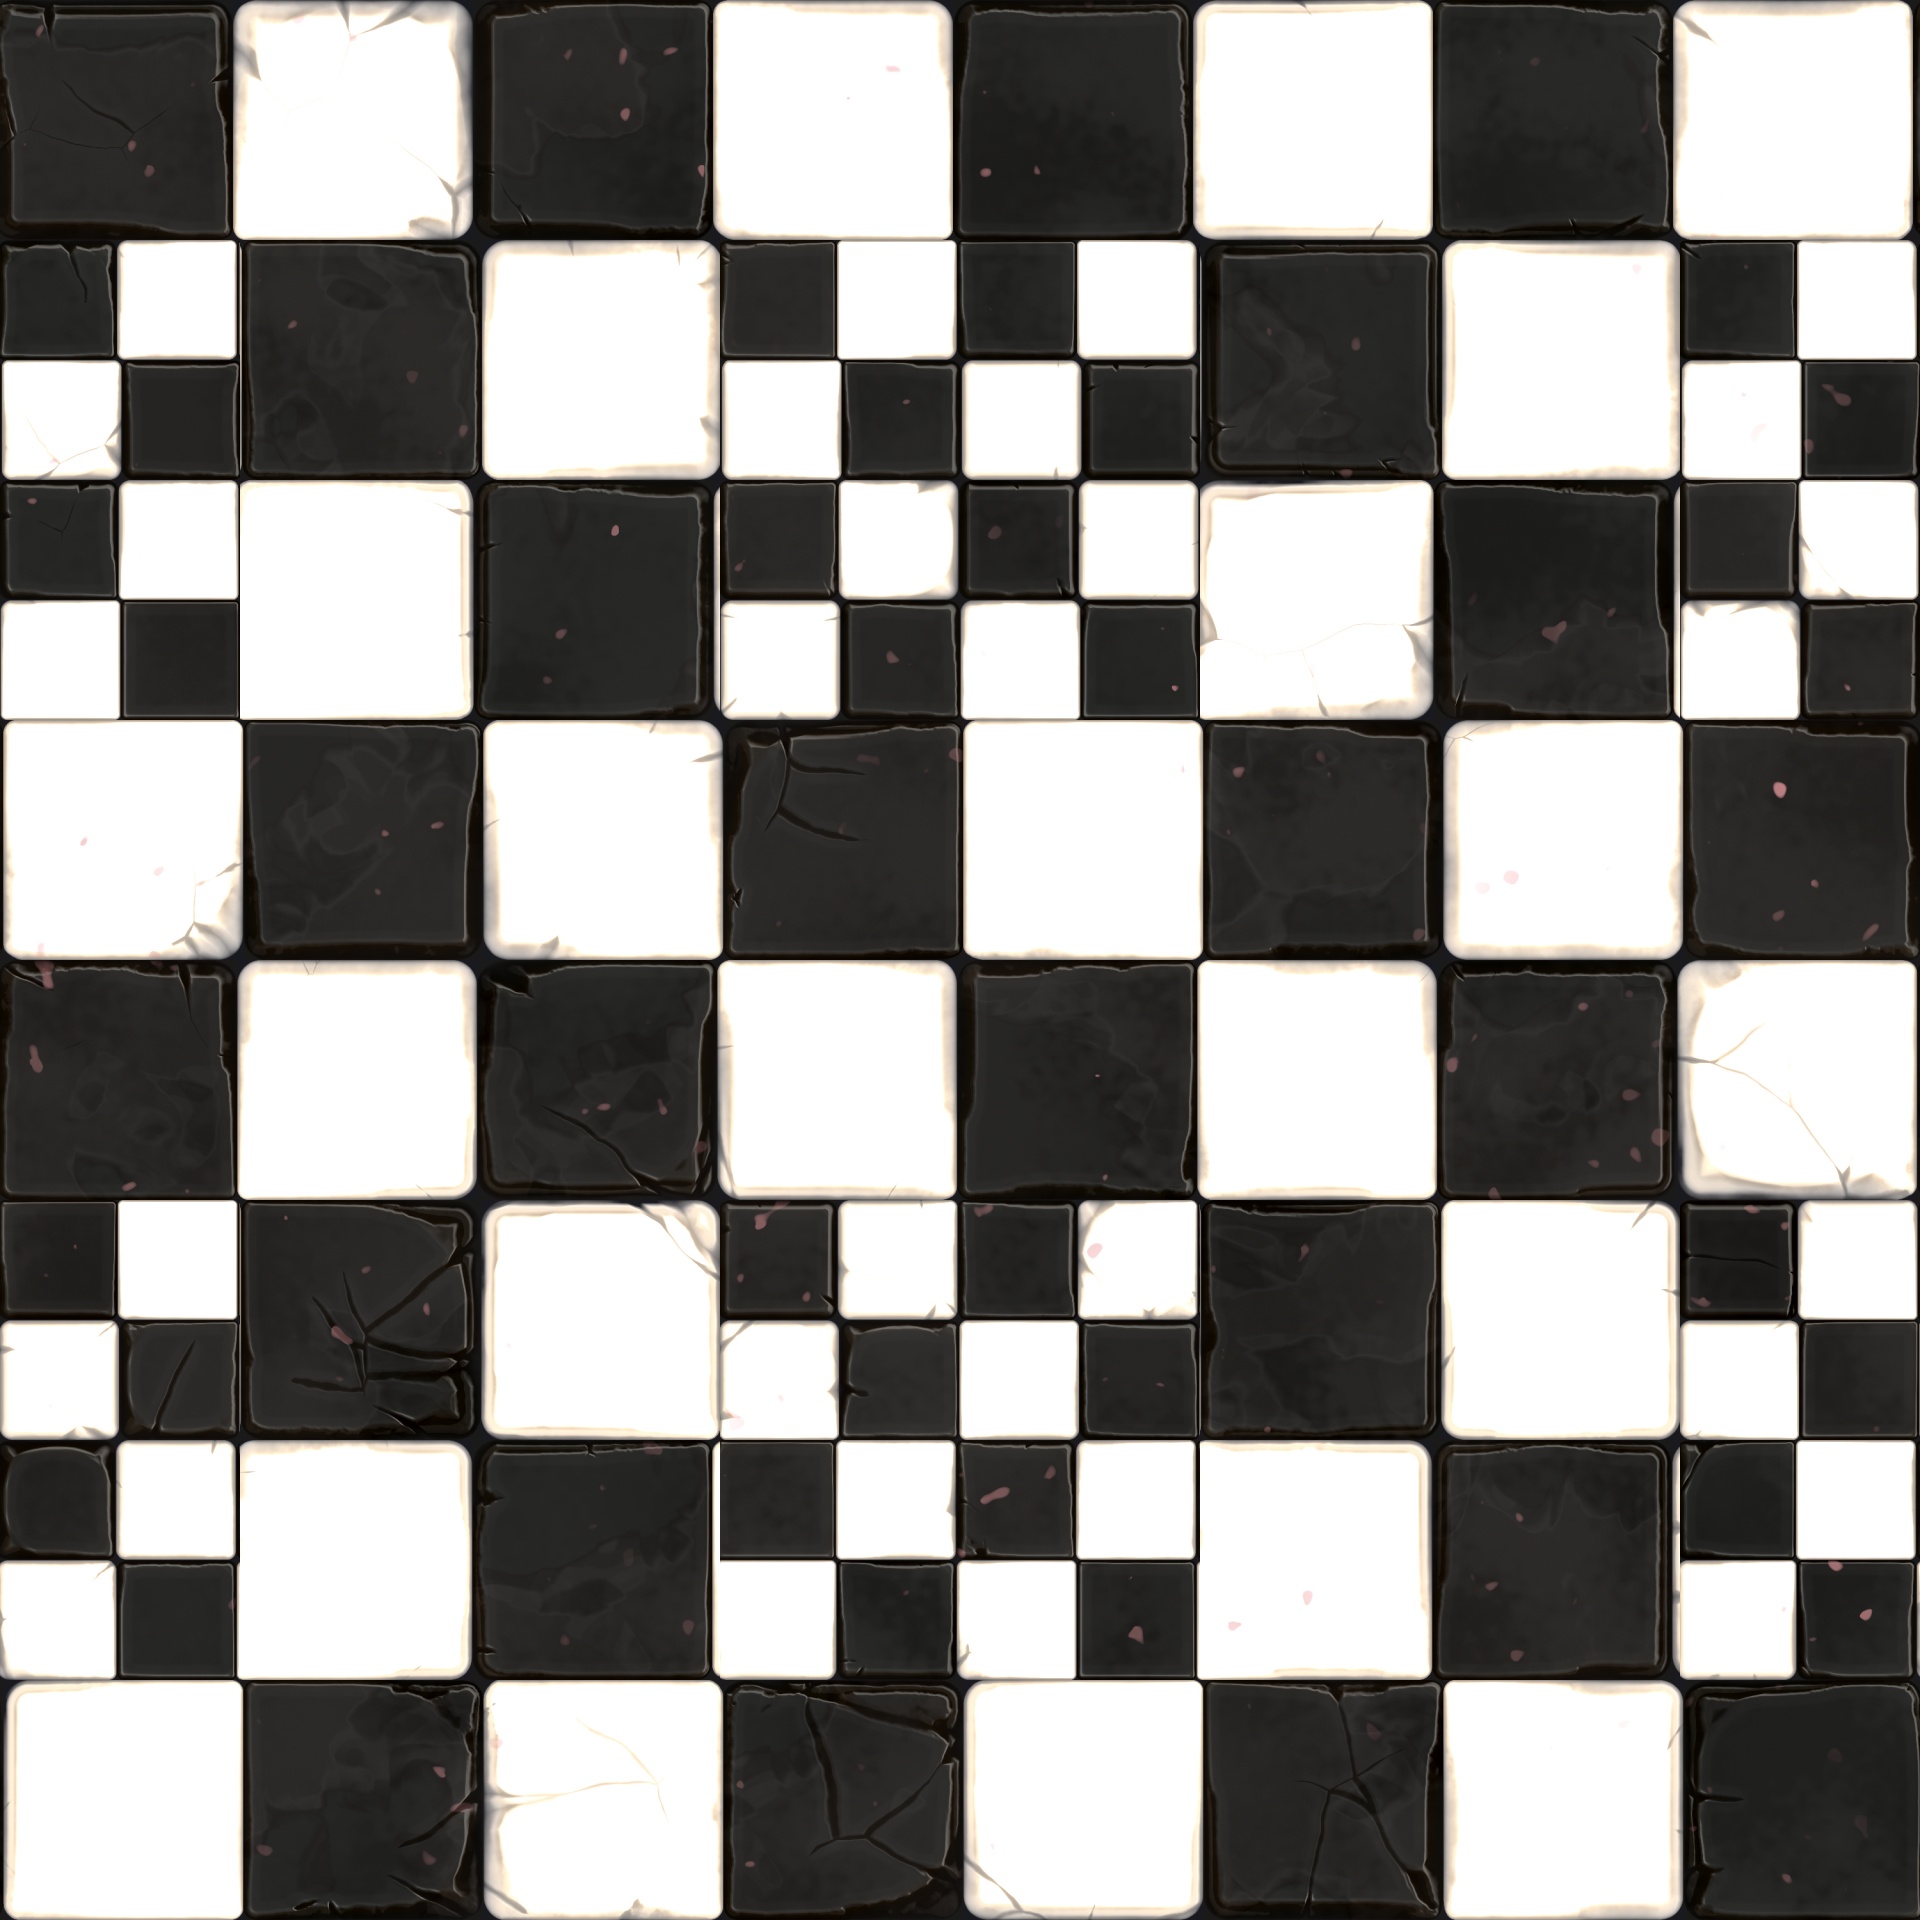 Irregular,black,white,checker,checkerboard - free photo from needpix.com AM...